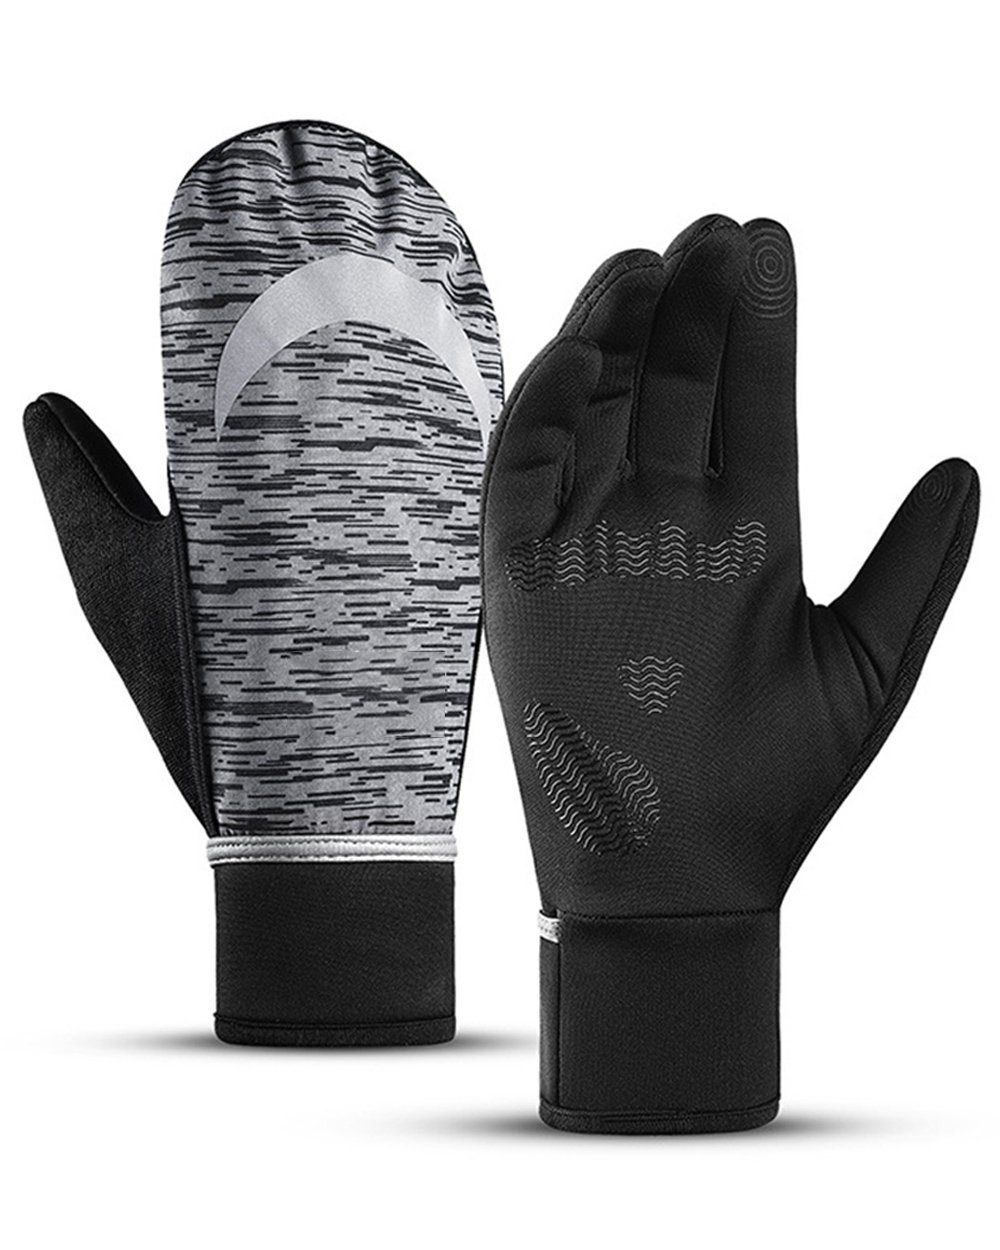 Fahrradhandschuhe Sporthandschuhe, Skihandschuhe, Dekorative faltbare Warme Handschuhe, Sporthandschuhe Handschuhe Winterwarme,